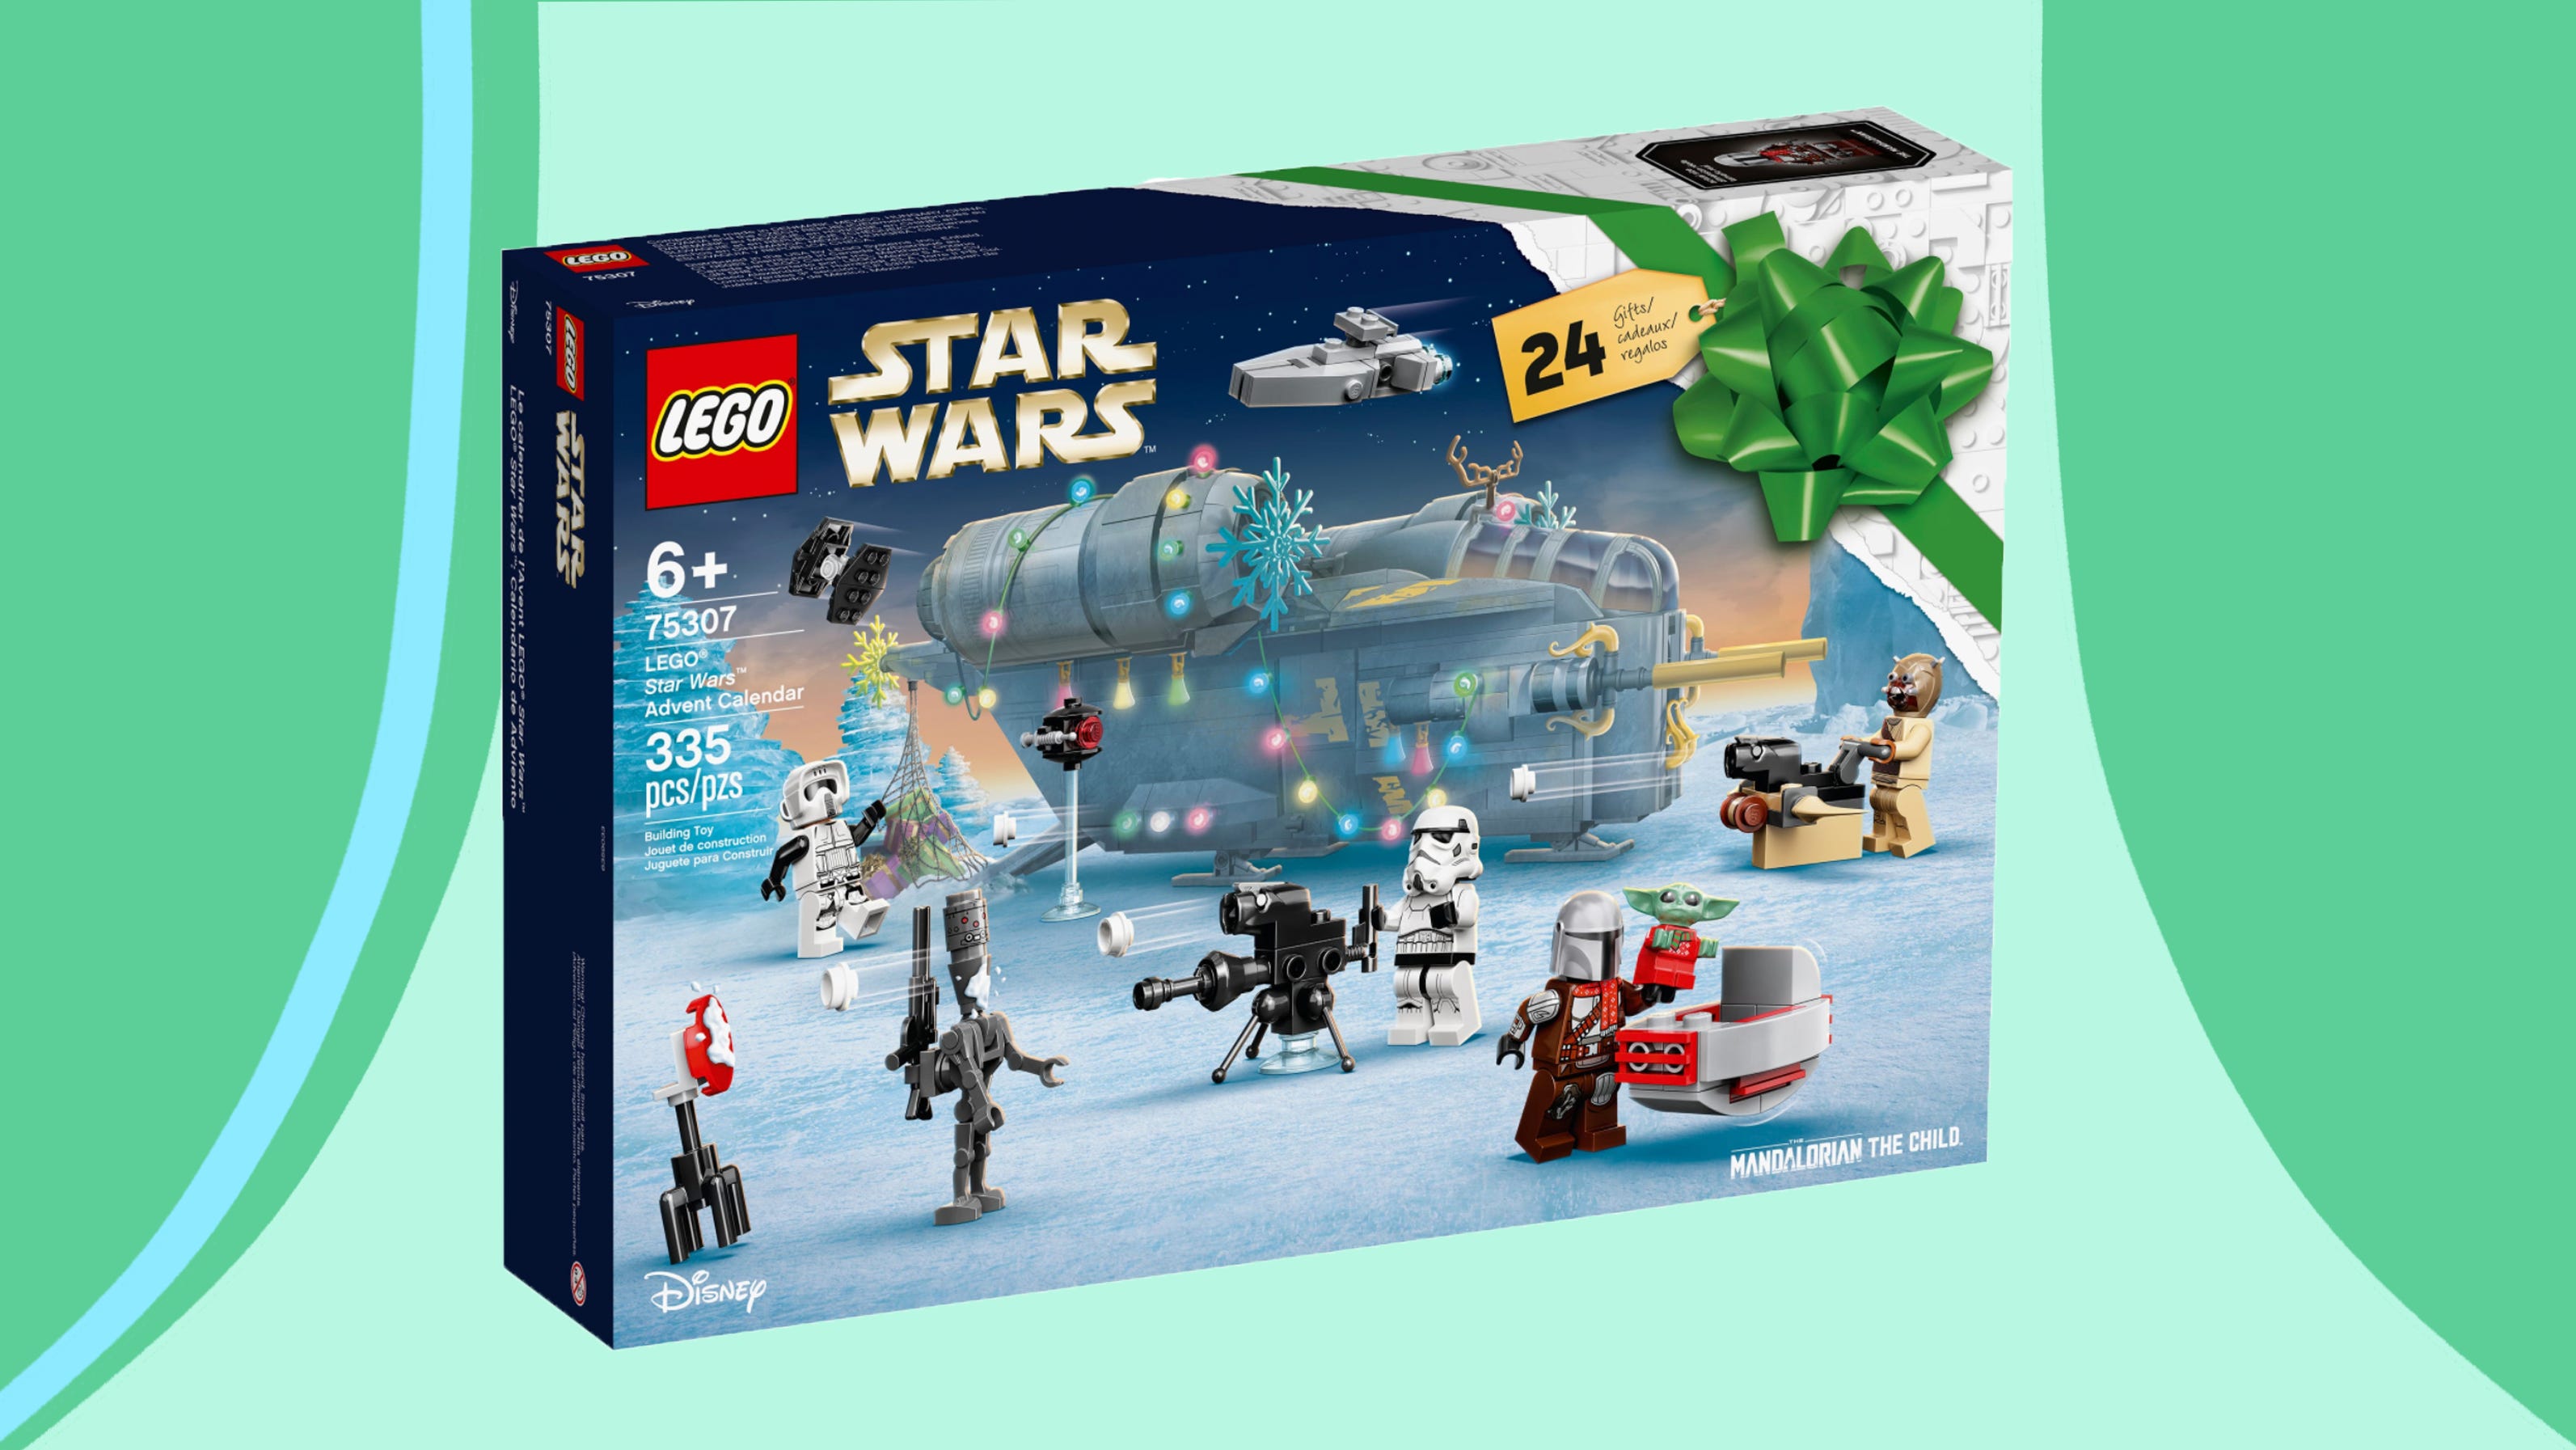 slette Signal glimt How to buy the Lego Star Wars Advent Calendar